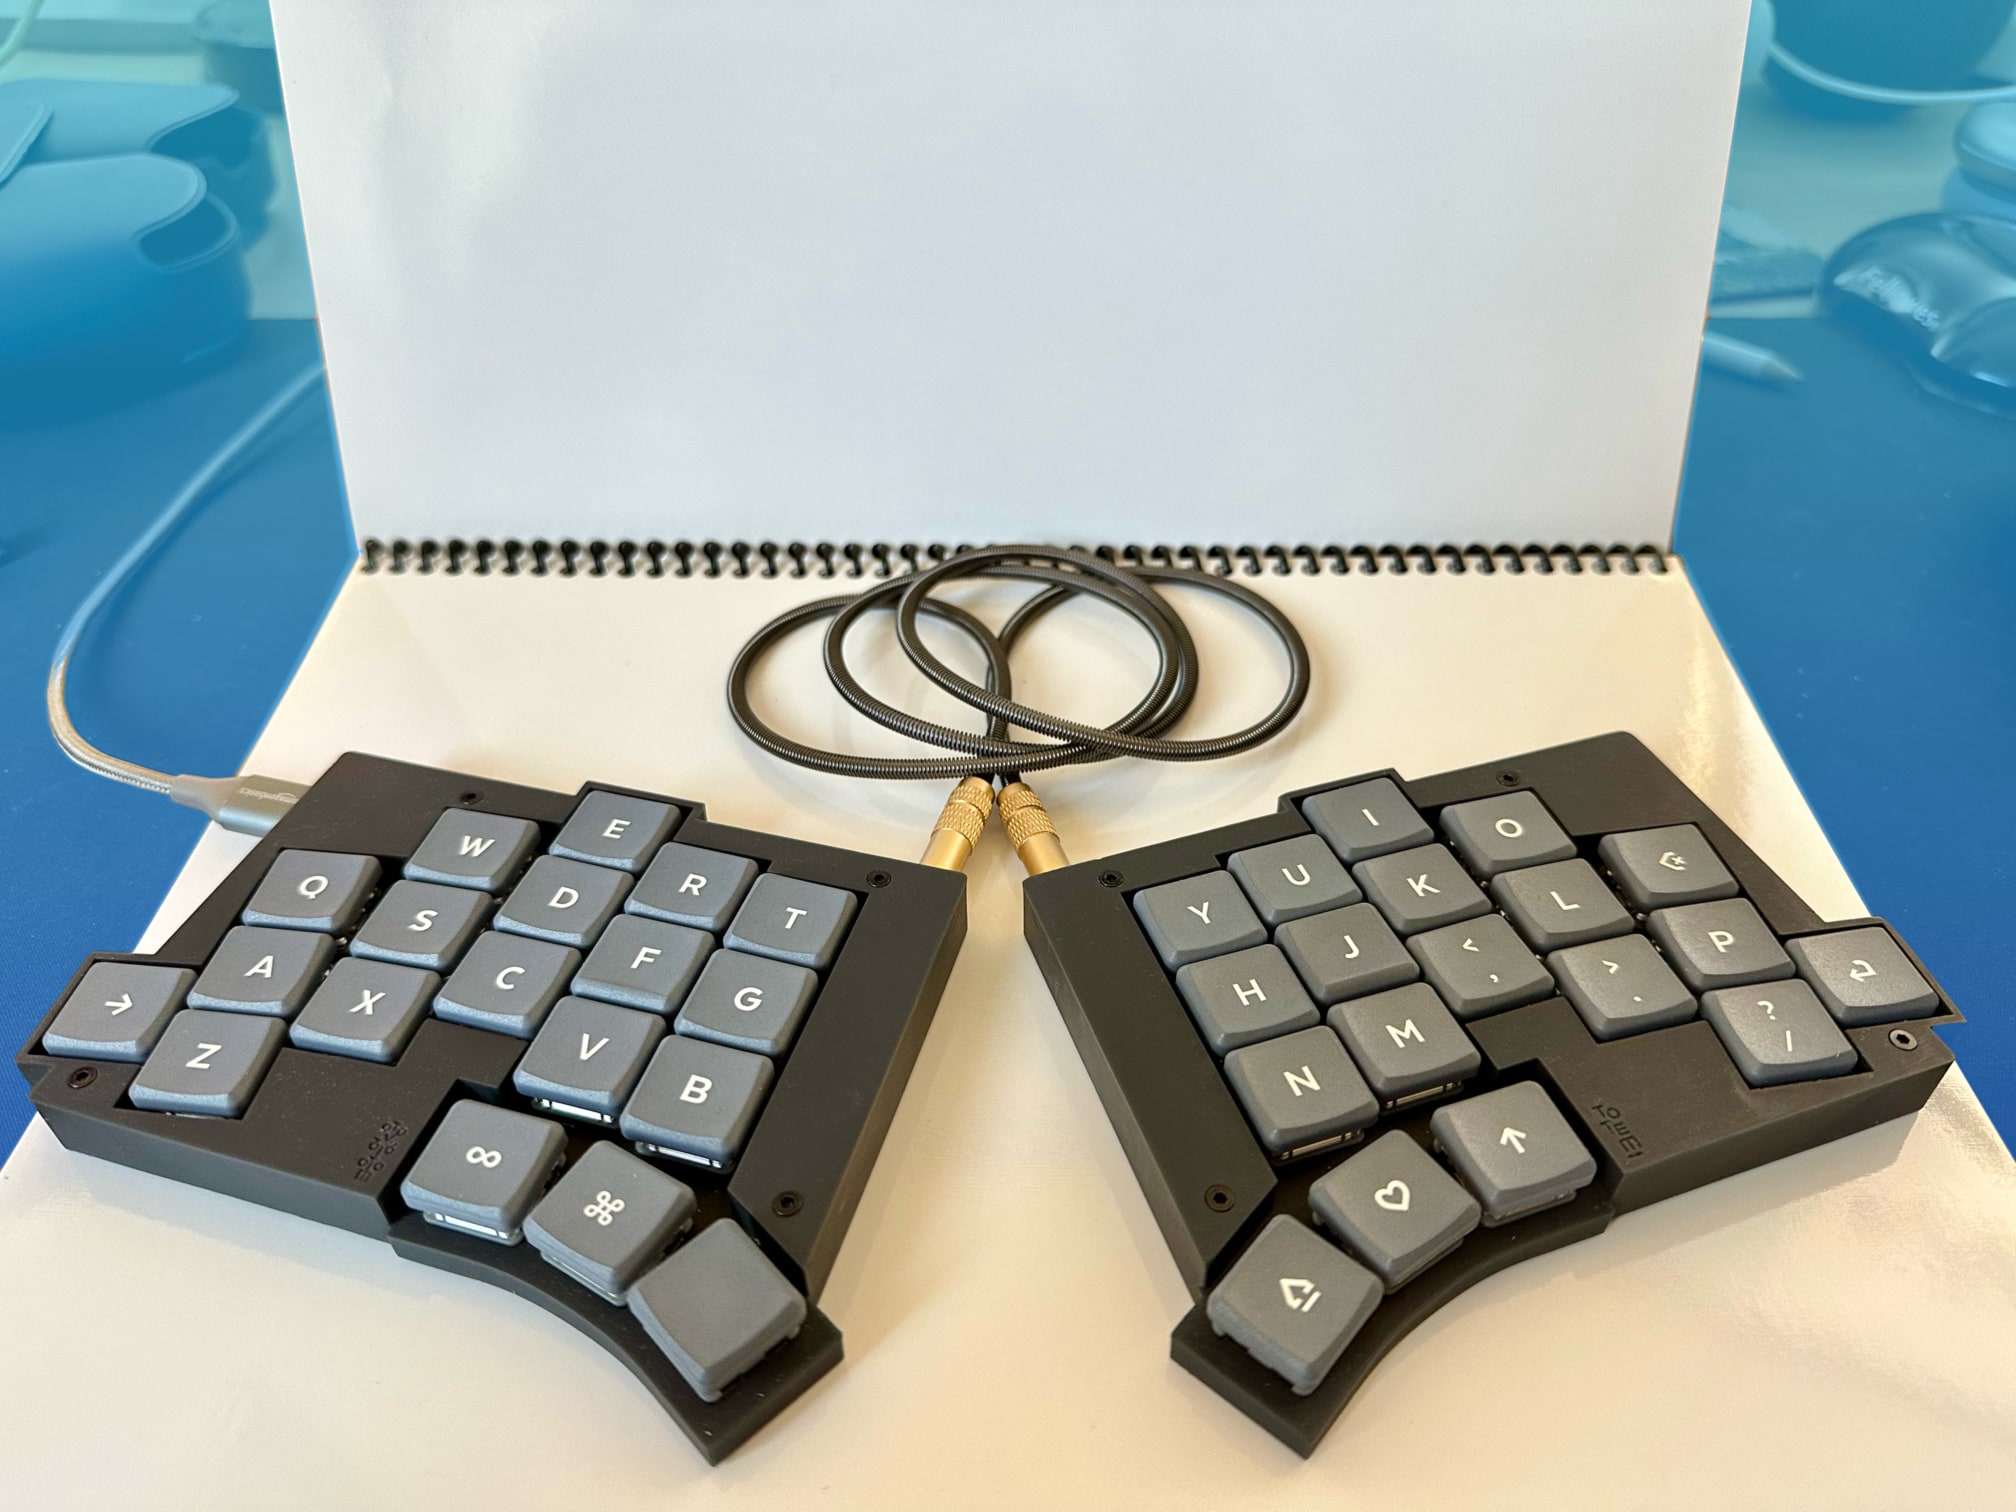 The Totem keyboard